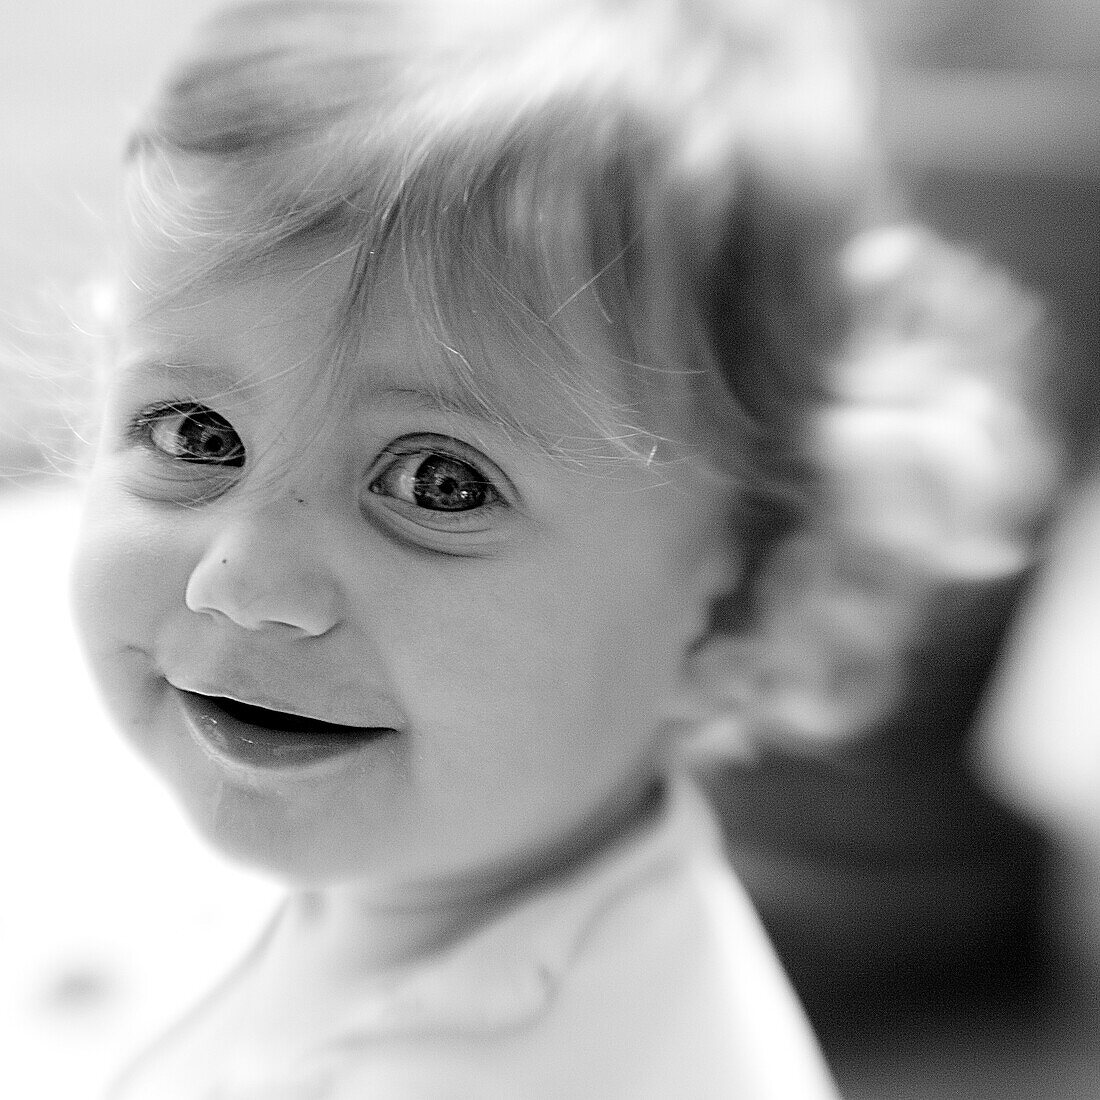 Smiling baby girl with big eyes (black and white photo using Lensbaby technique), Borden, Western Australia, Australia